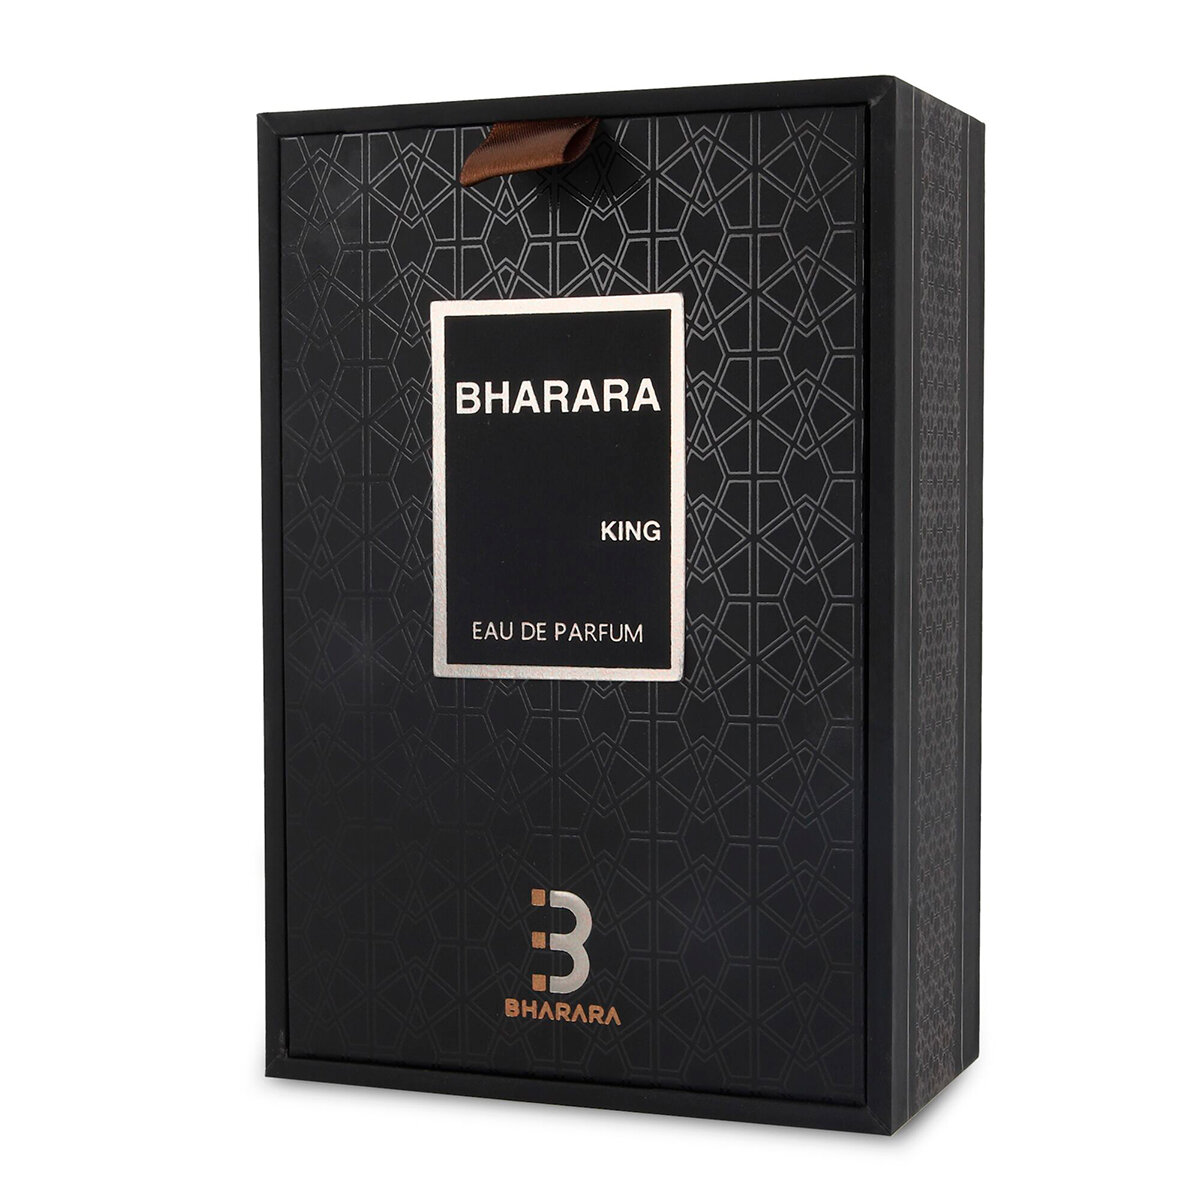 Bharara King 100 ml